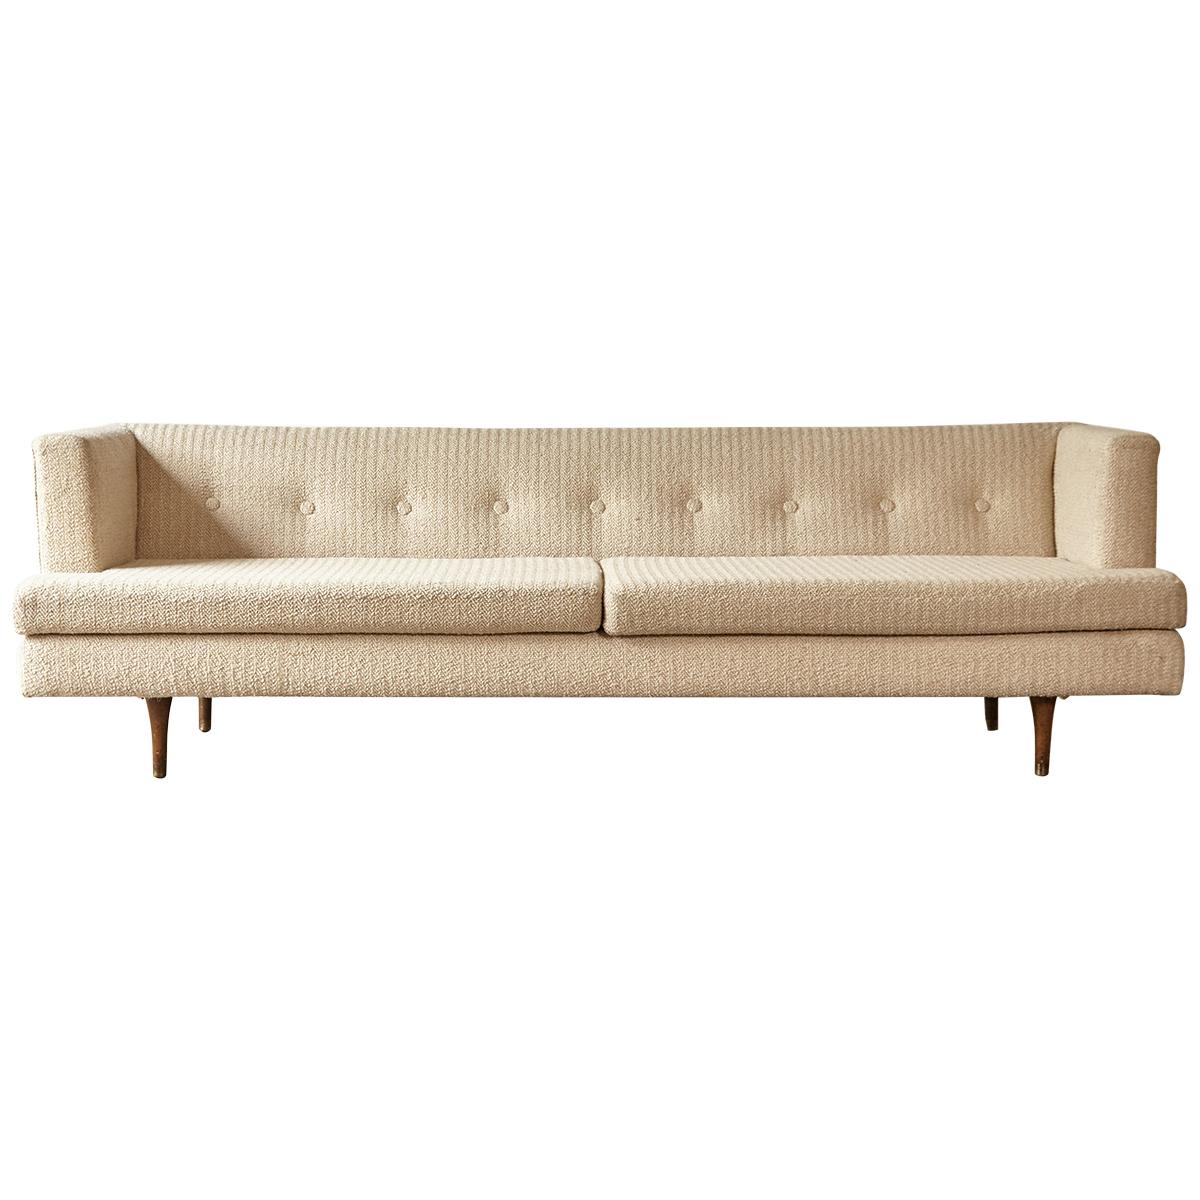 Edward Wormley Even Arm Sofa, Made by Dunbar, USA, 1950s